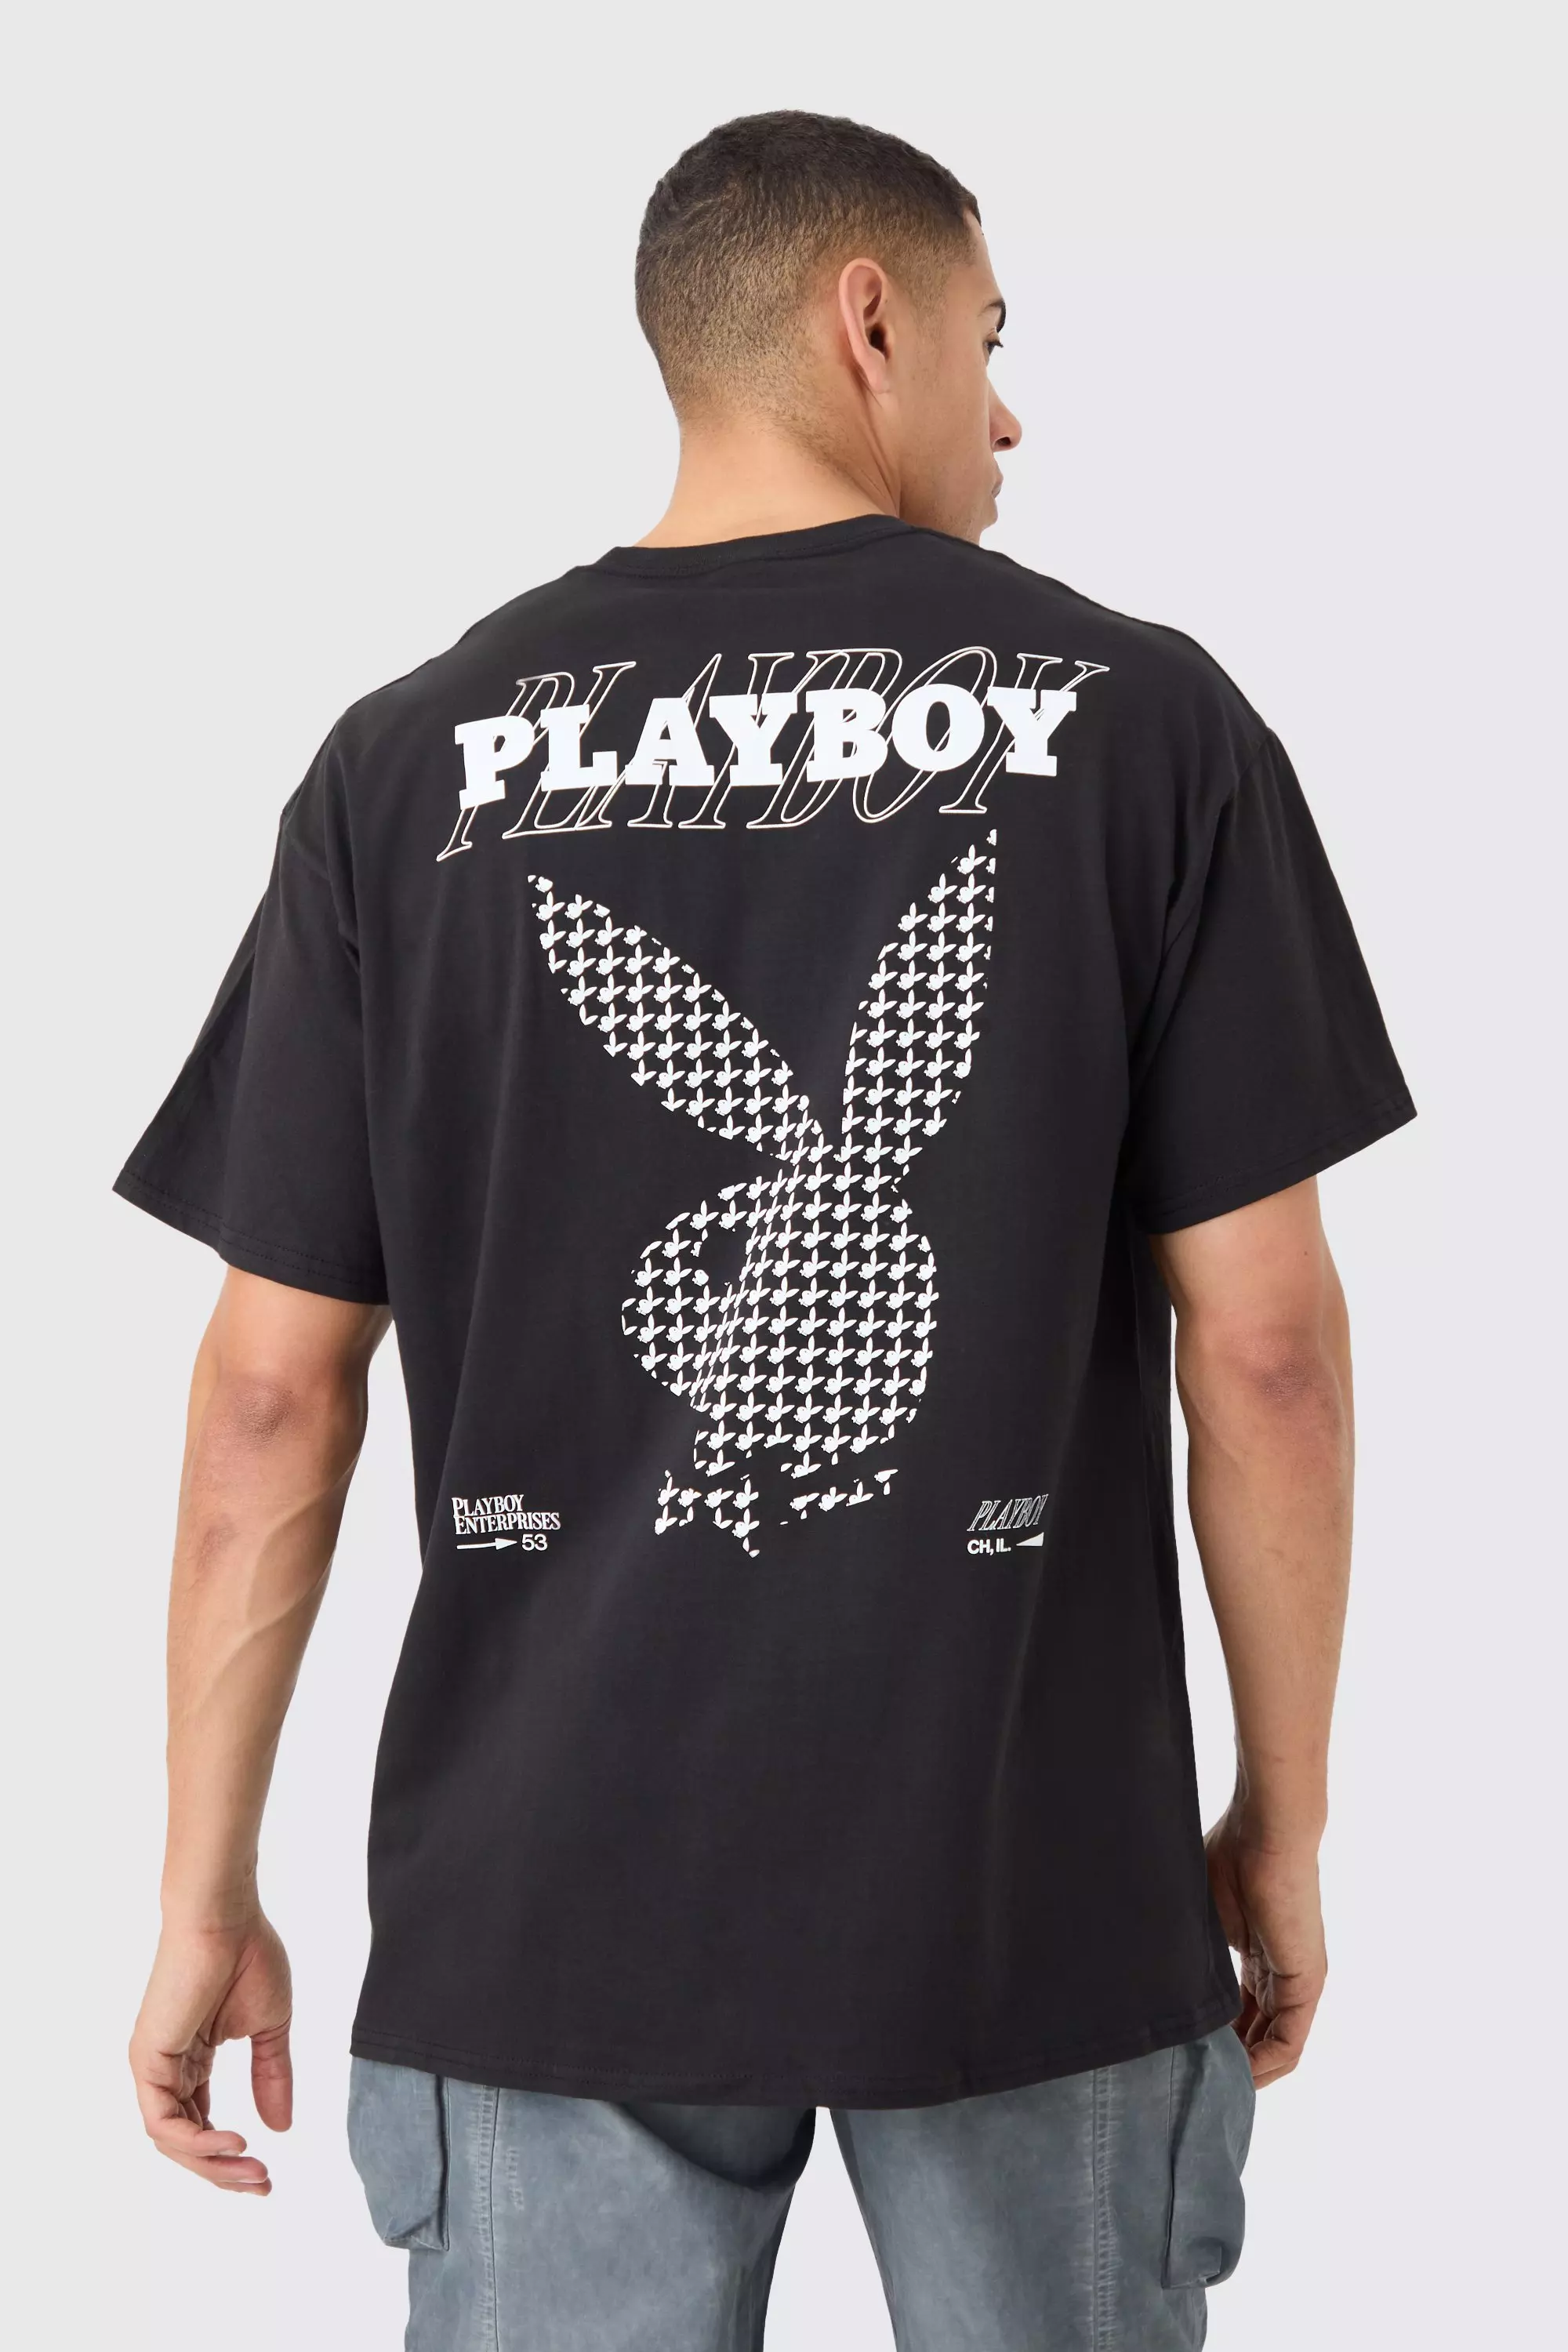 Oversized Playboy License T-shirt Black